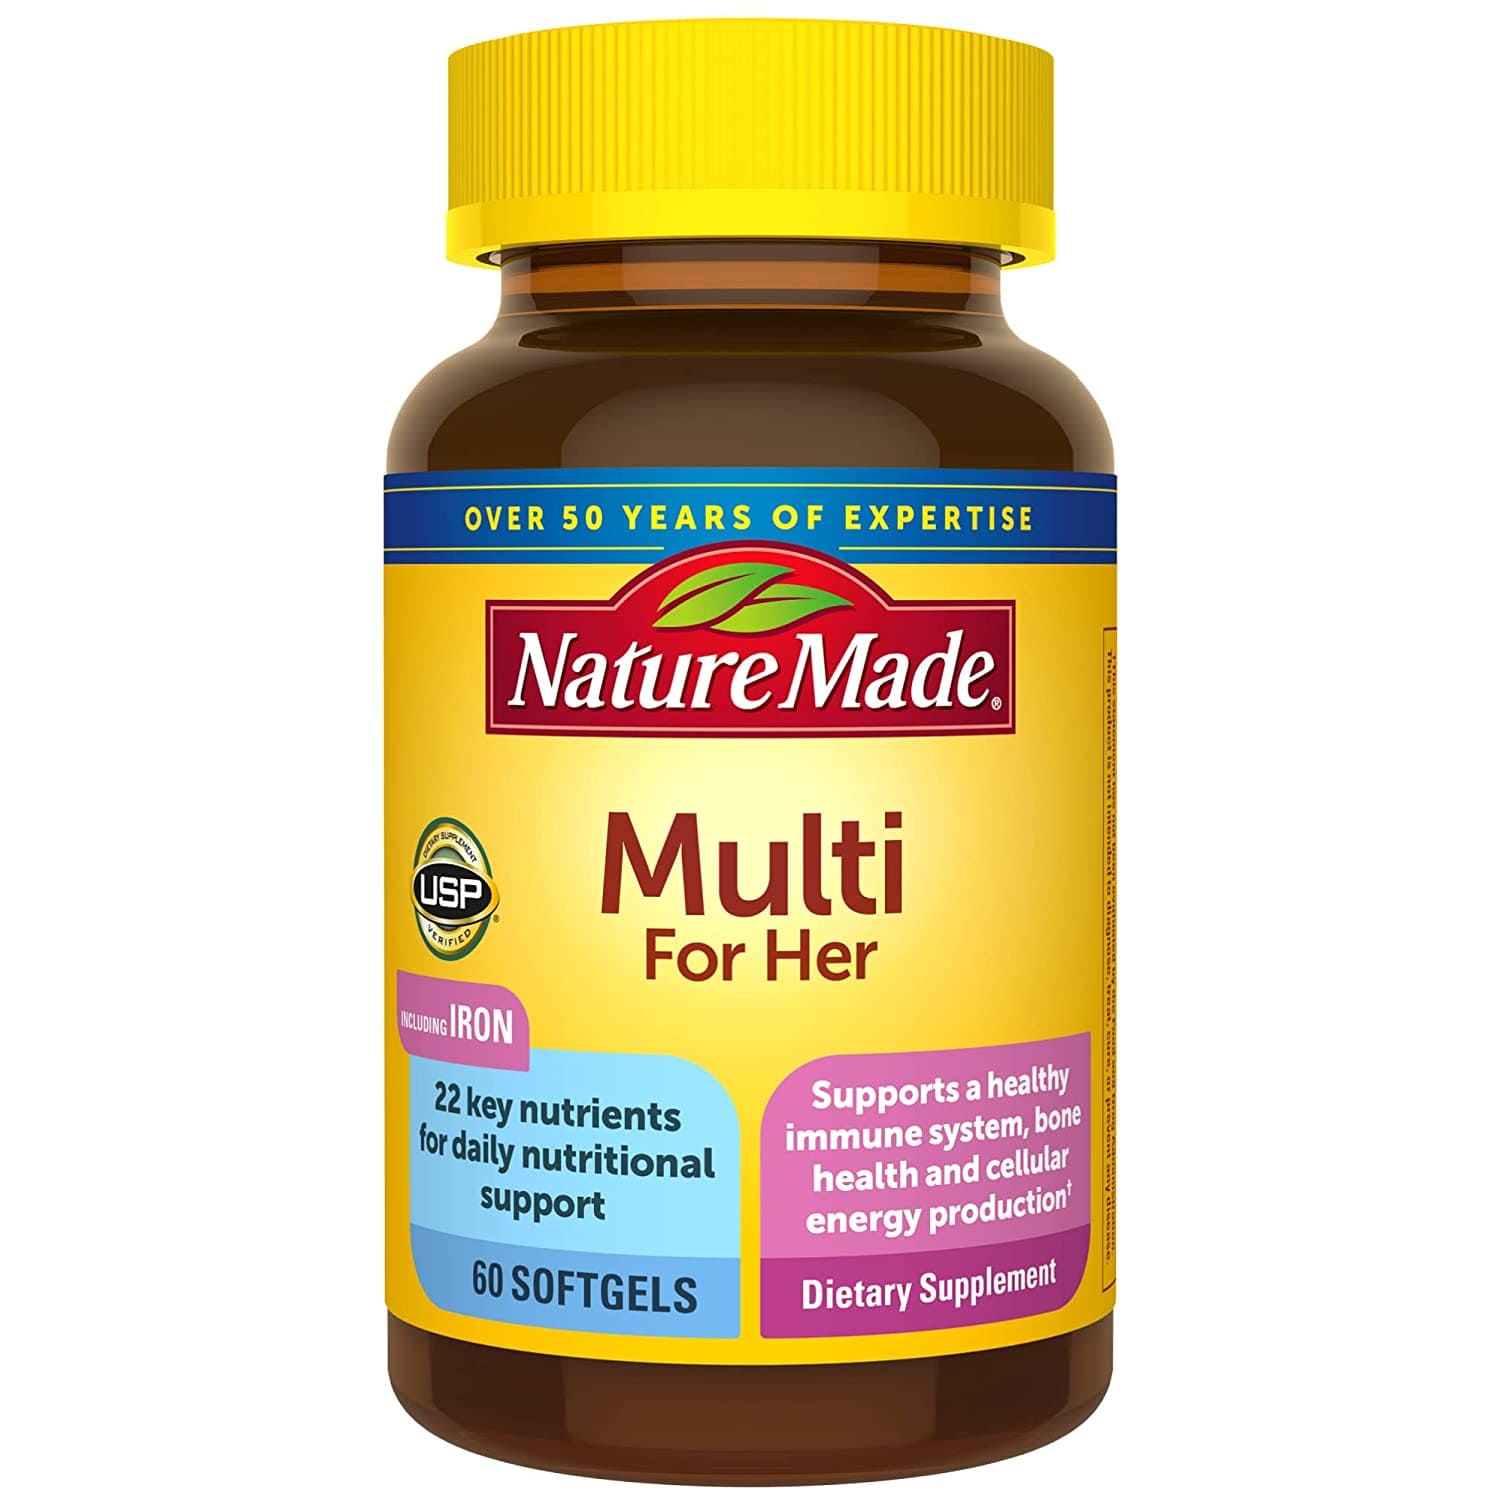 Nature Made Multivitamin for Women